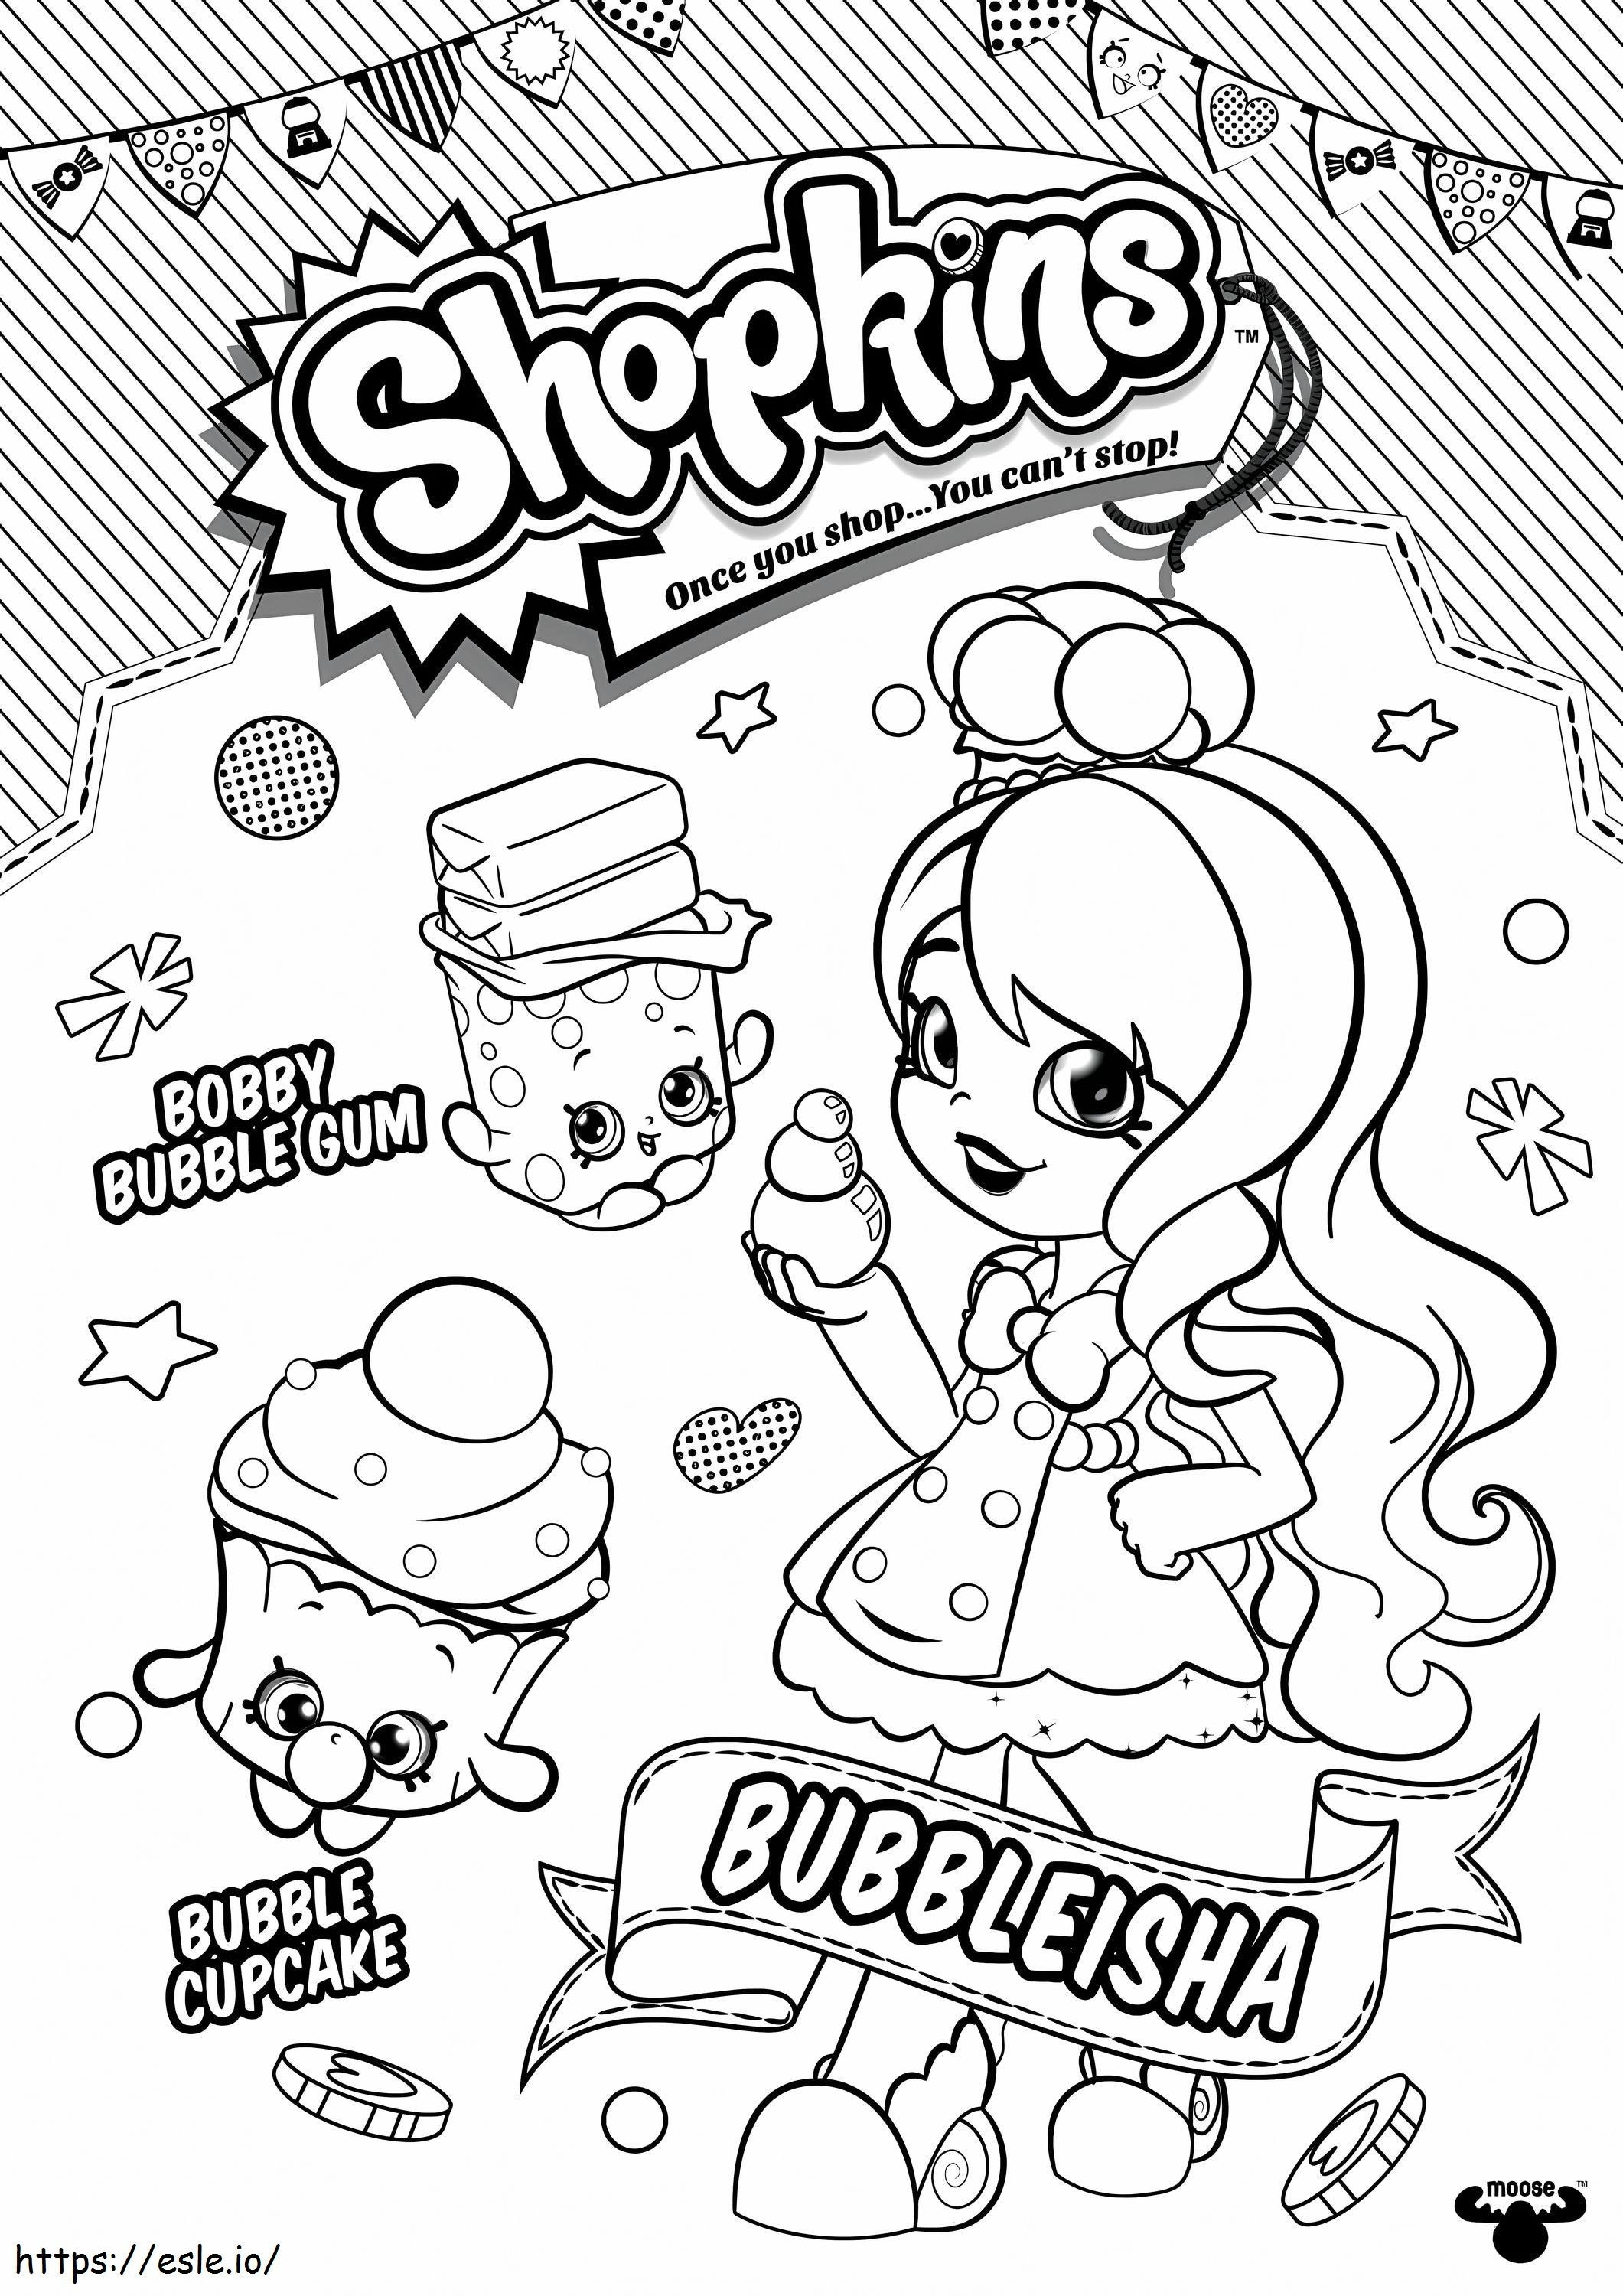 Bubbleisha Shopkins coloring page